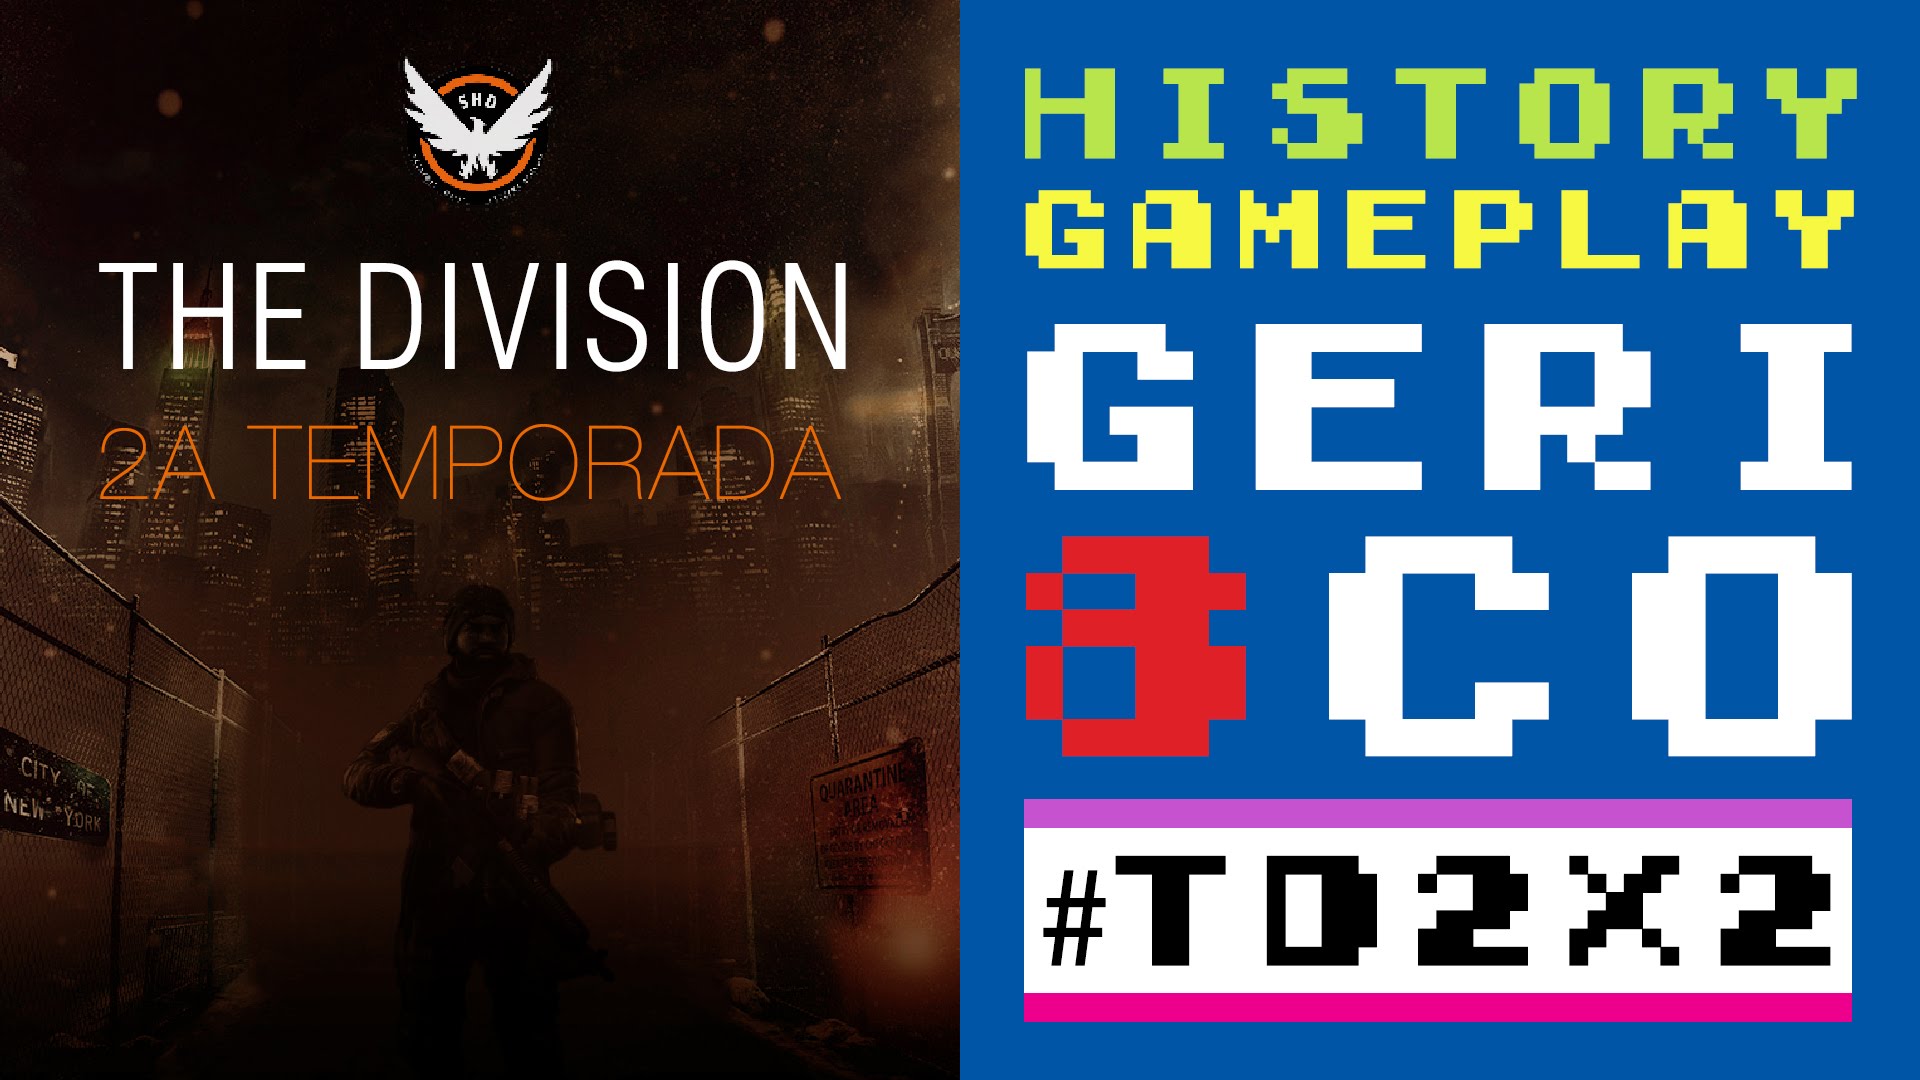 THE DIVISION 2A TEMPORADA (HISTORY GAMEPLAY) #TD2X2 de GERI8CO